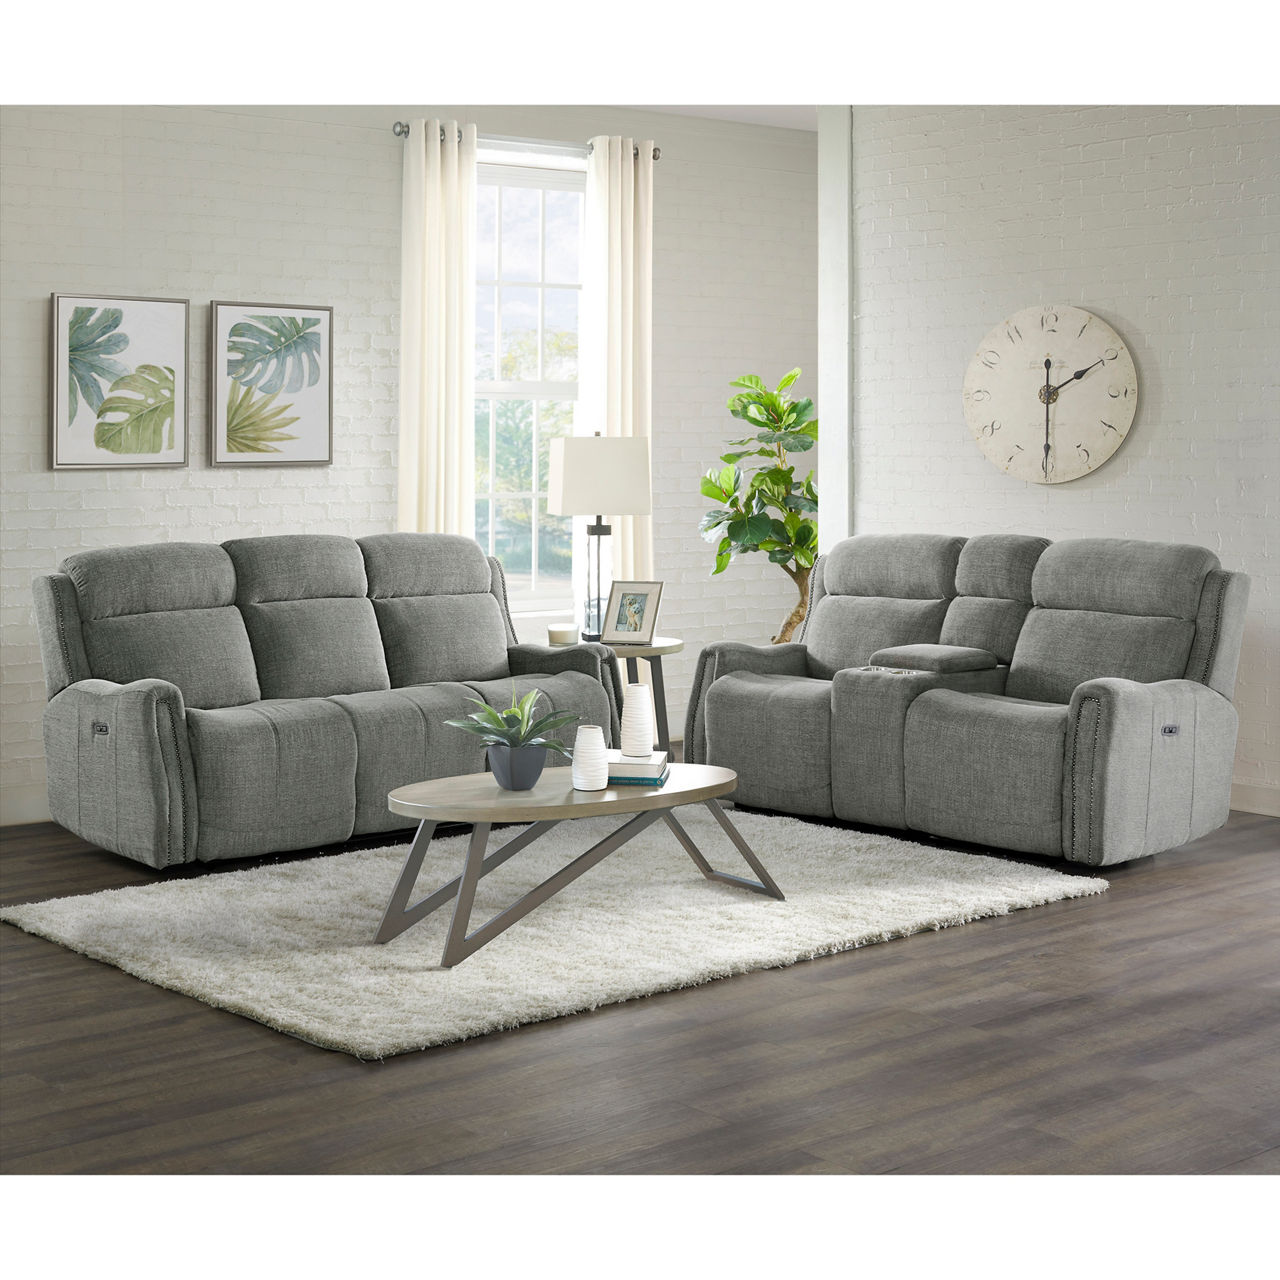 Broyhill Living Room Furniture At Big Lots